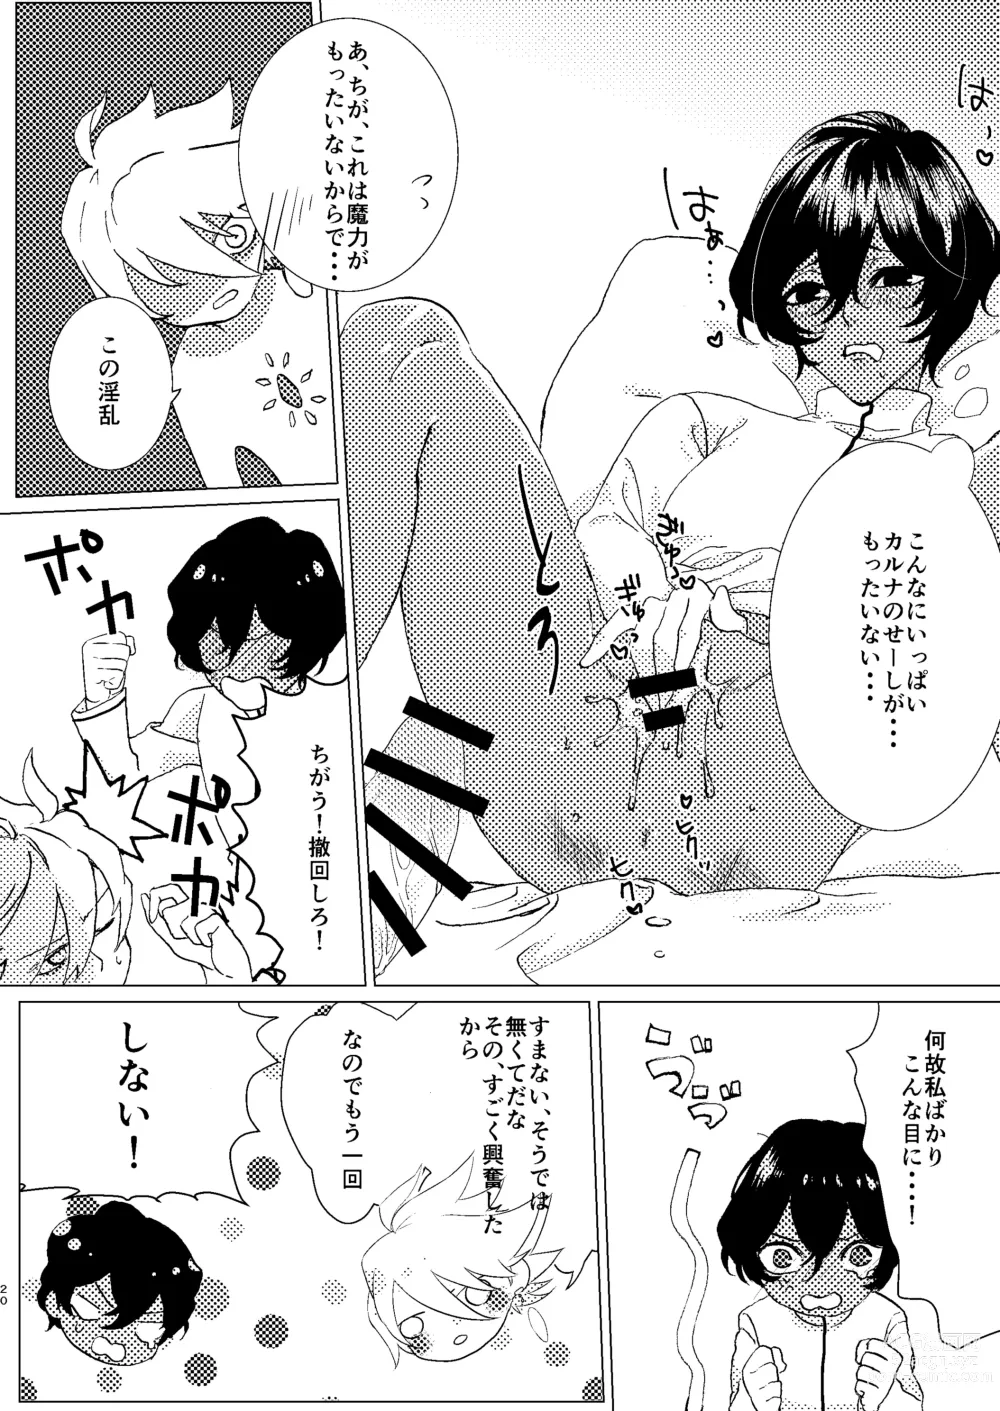 Page 19 of doujinshi honeydew nightmare